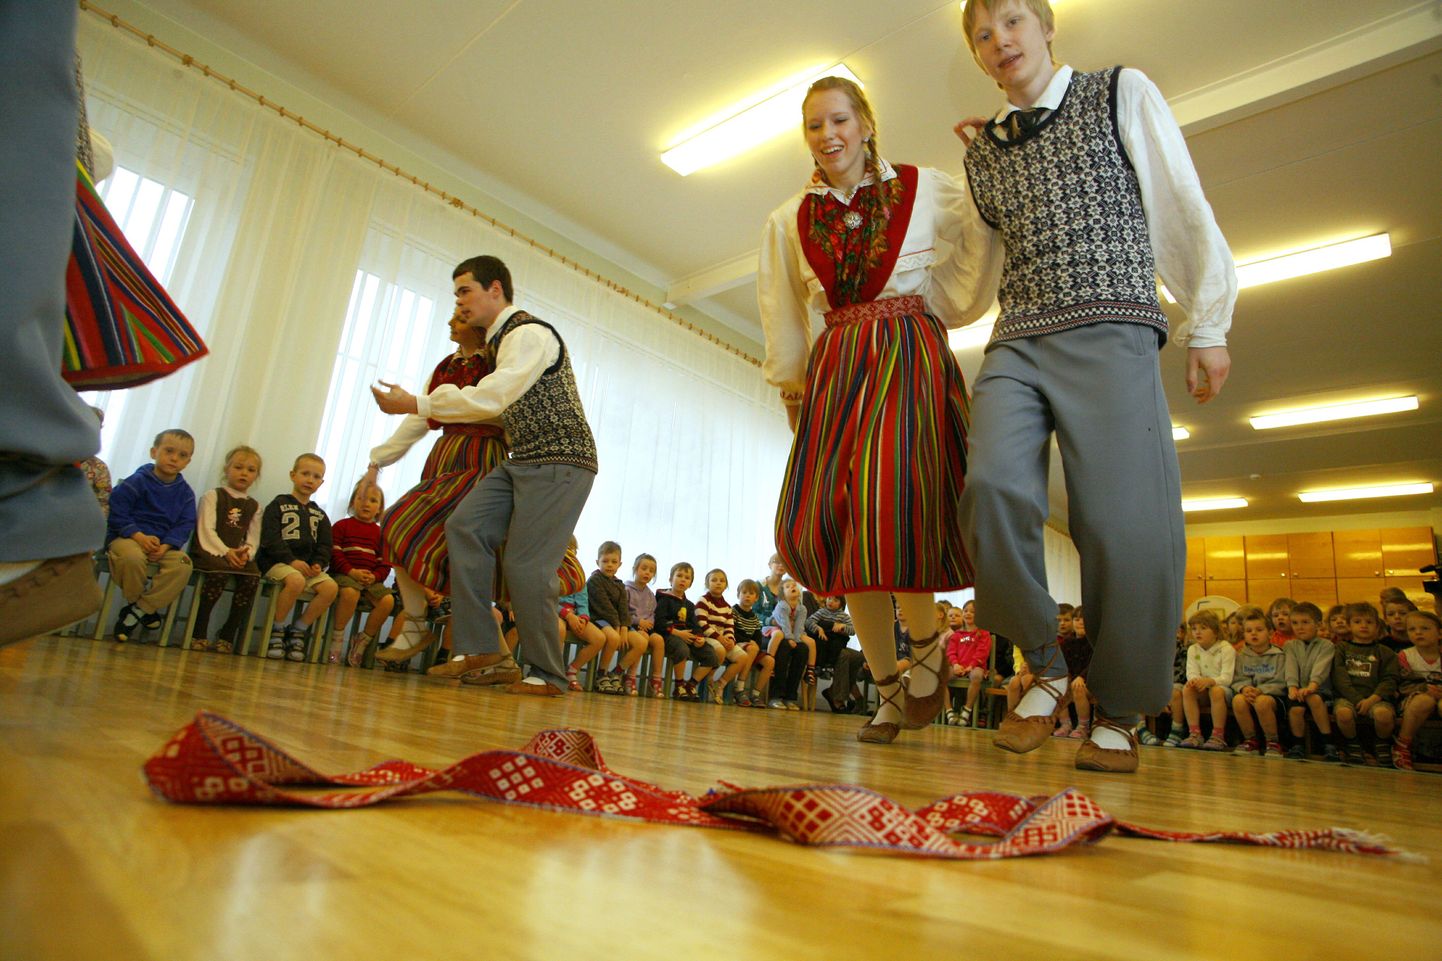 Noorte tantsurühm Kajakas esinemas Metsa tänava lasteaias Pöialpoiss.